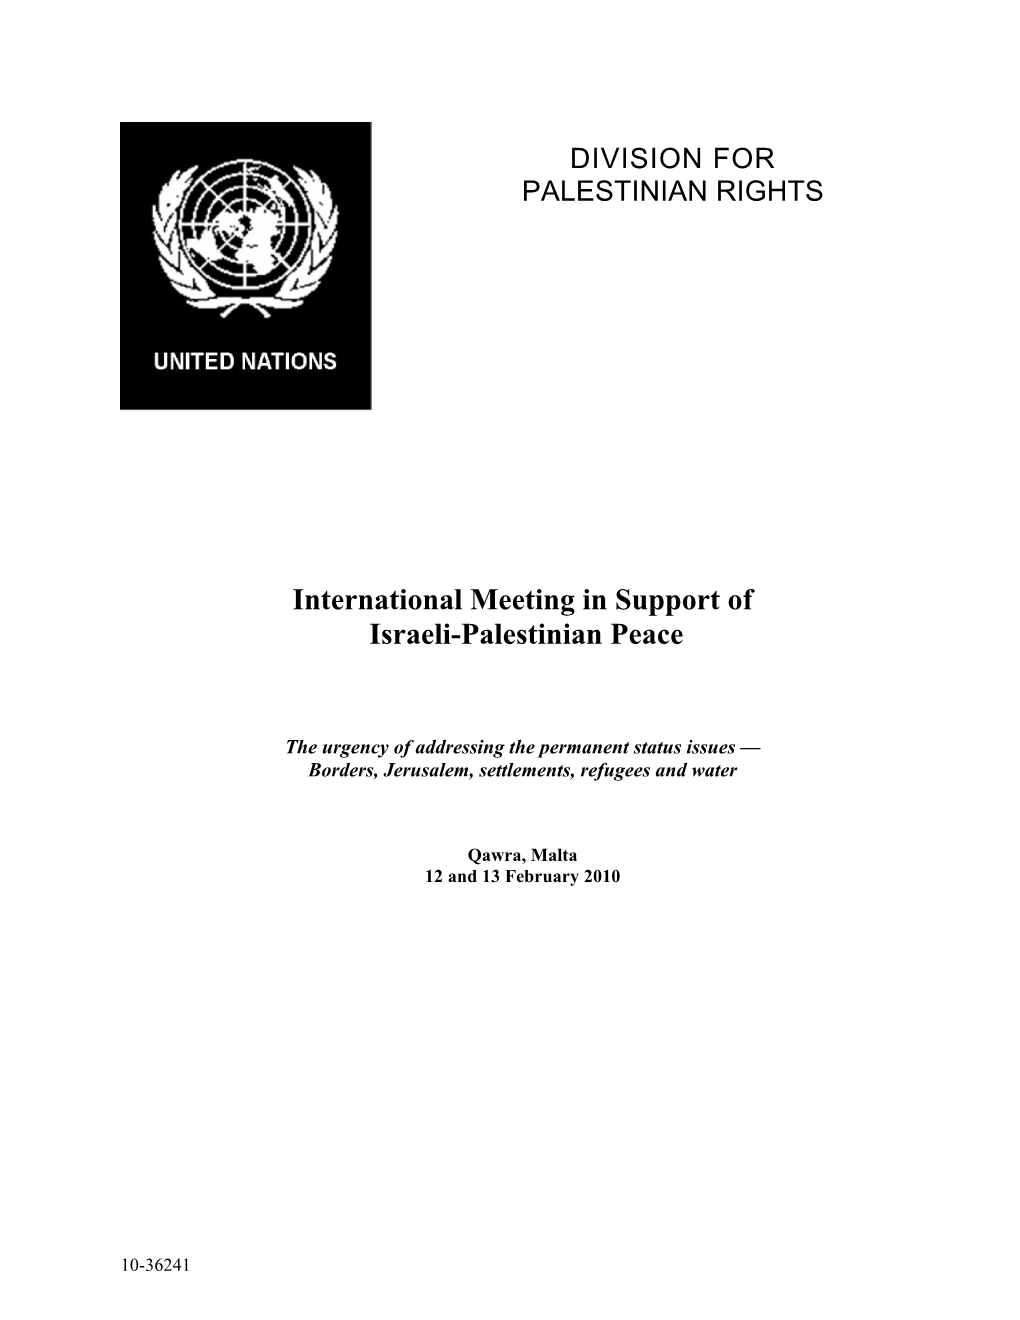 International Meeting in Support of Israeli-Palestinian Peace